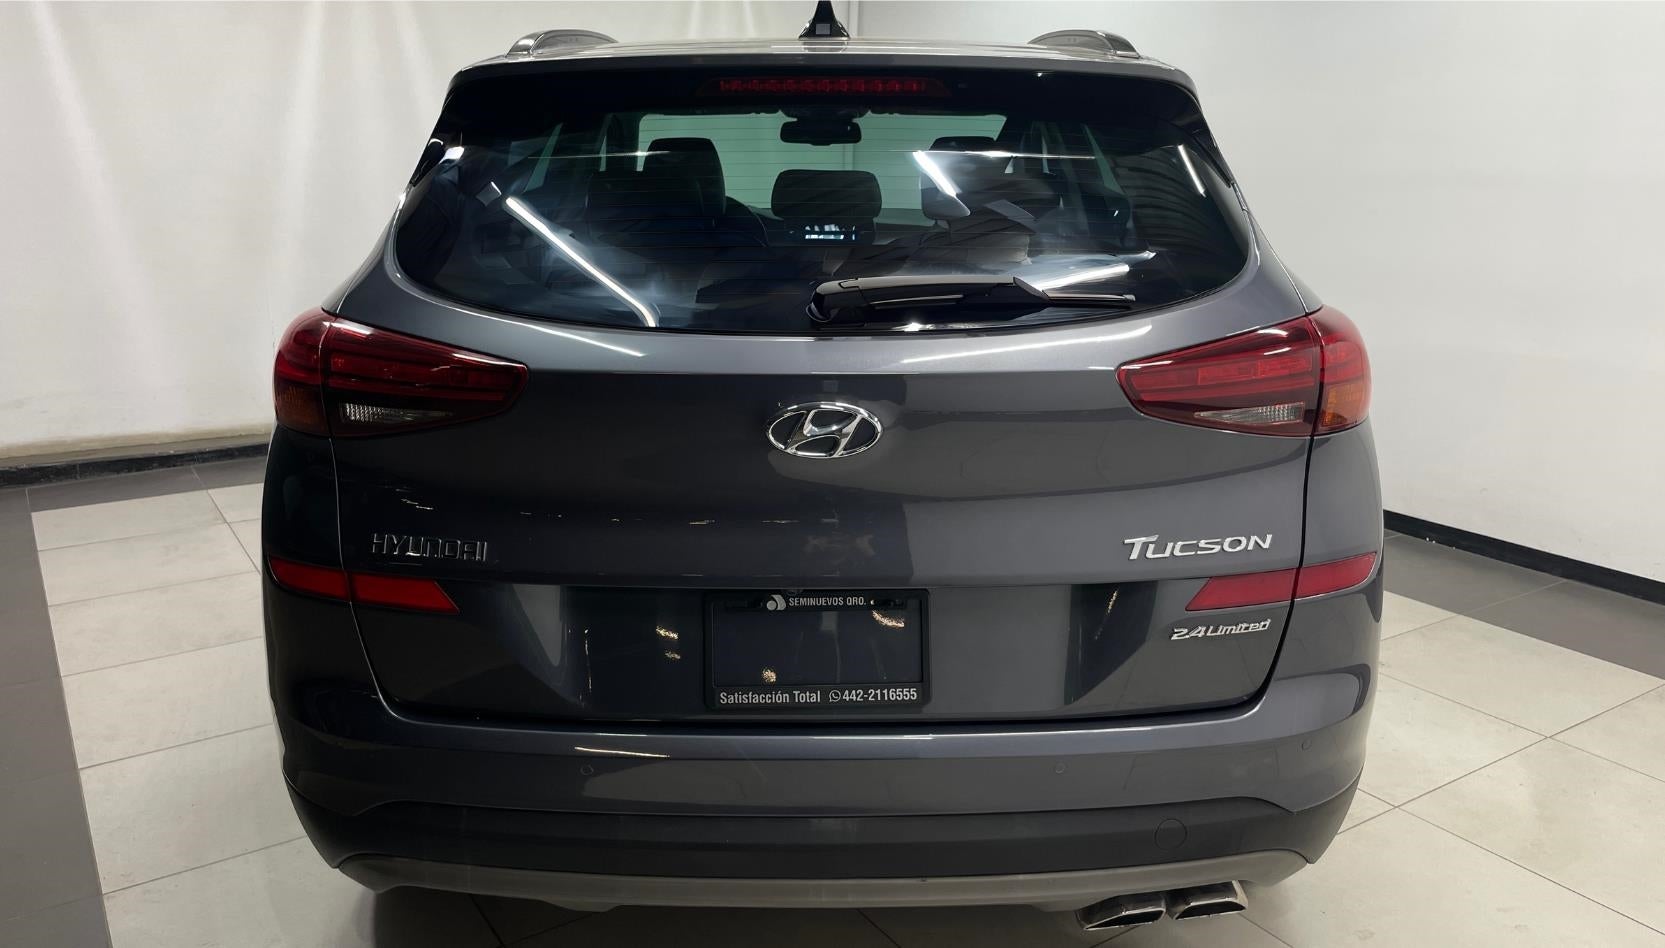 2019 Hyundai Tucson LIMITED TECH NAVI L4 2.4L 155 CP 5 PUERTAS AUT PIEL BA AA